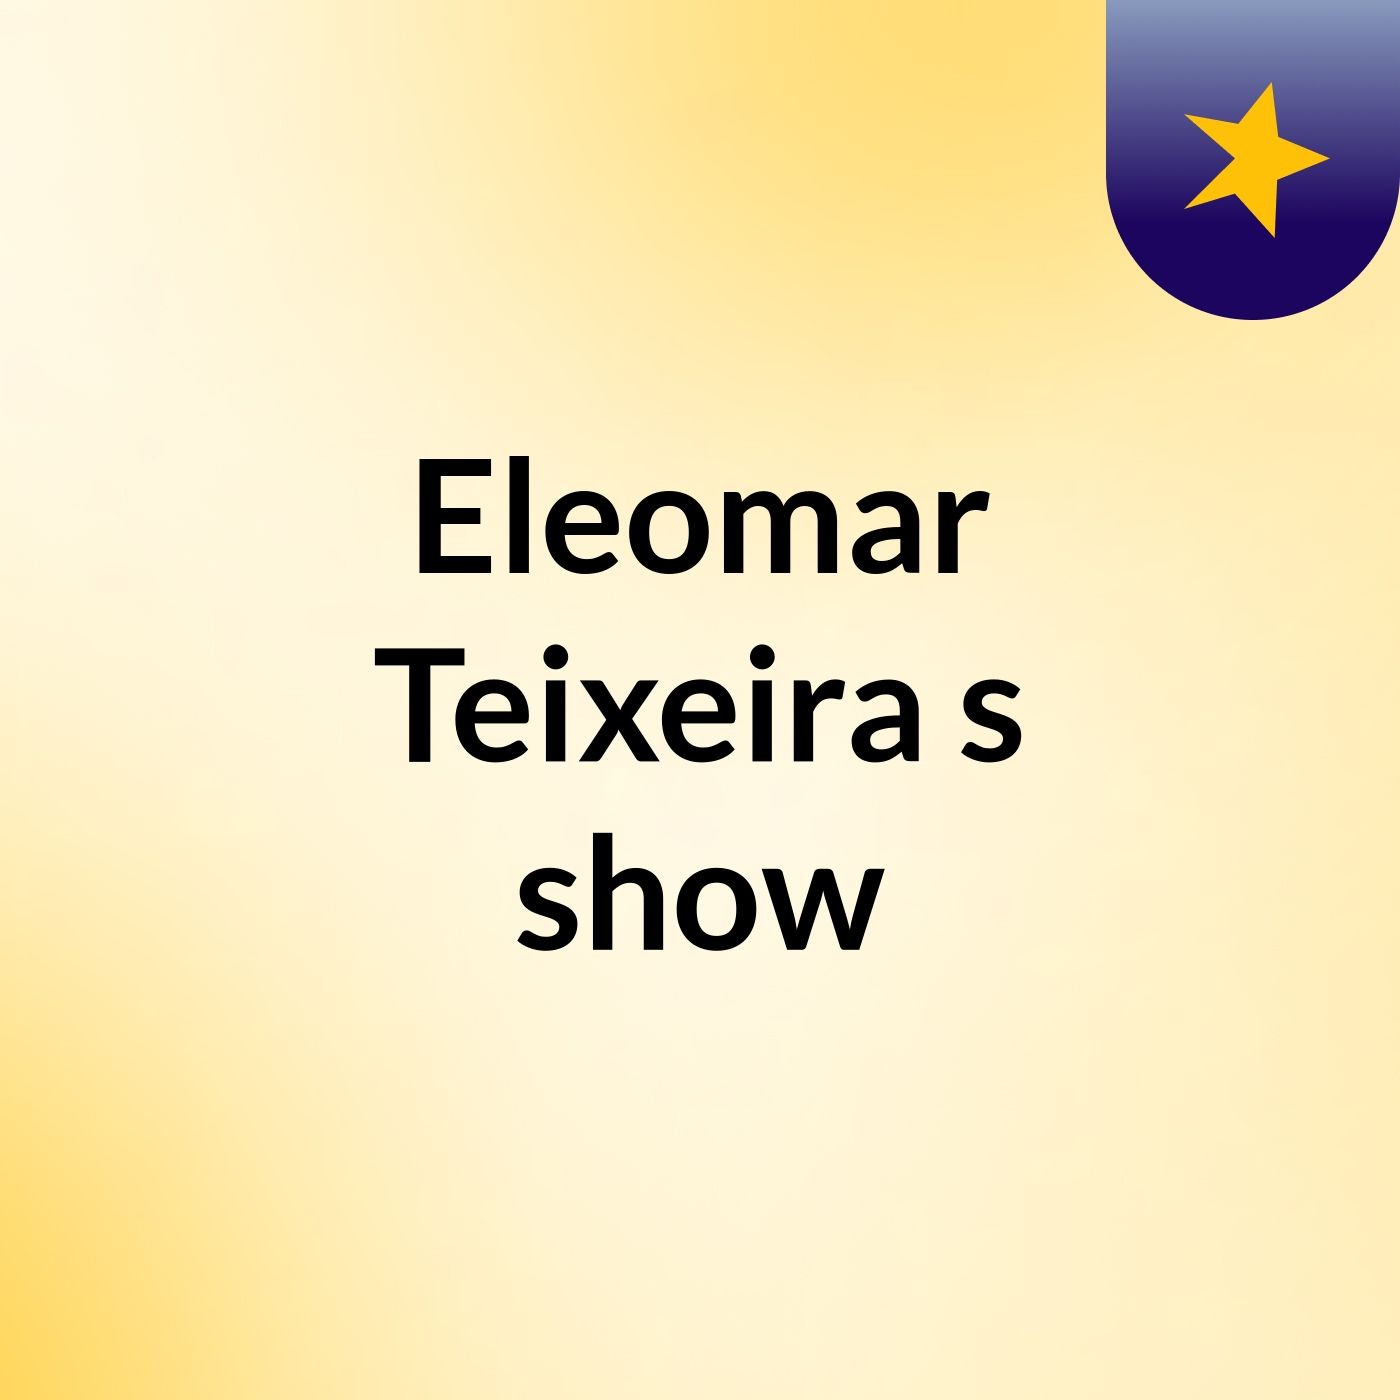 Eleomar Teixeira's show